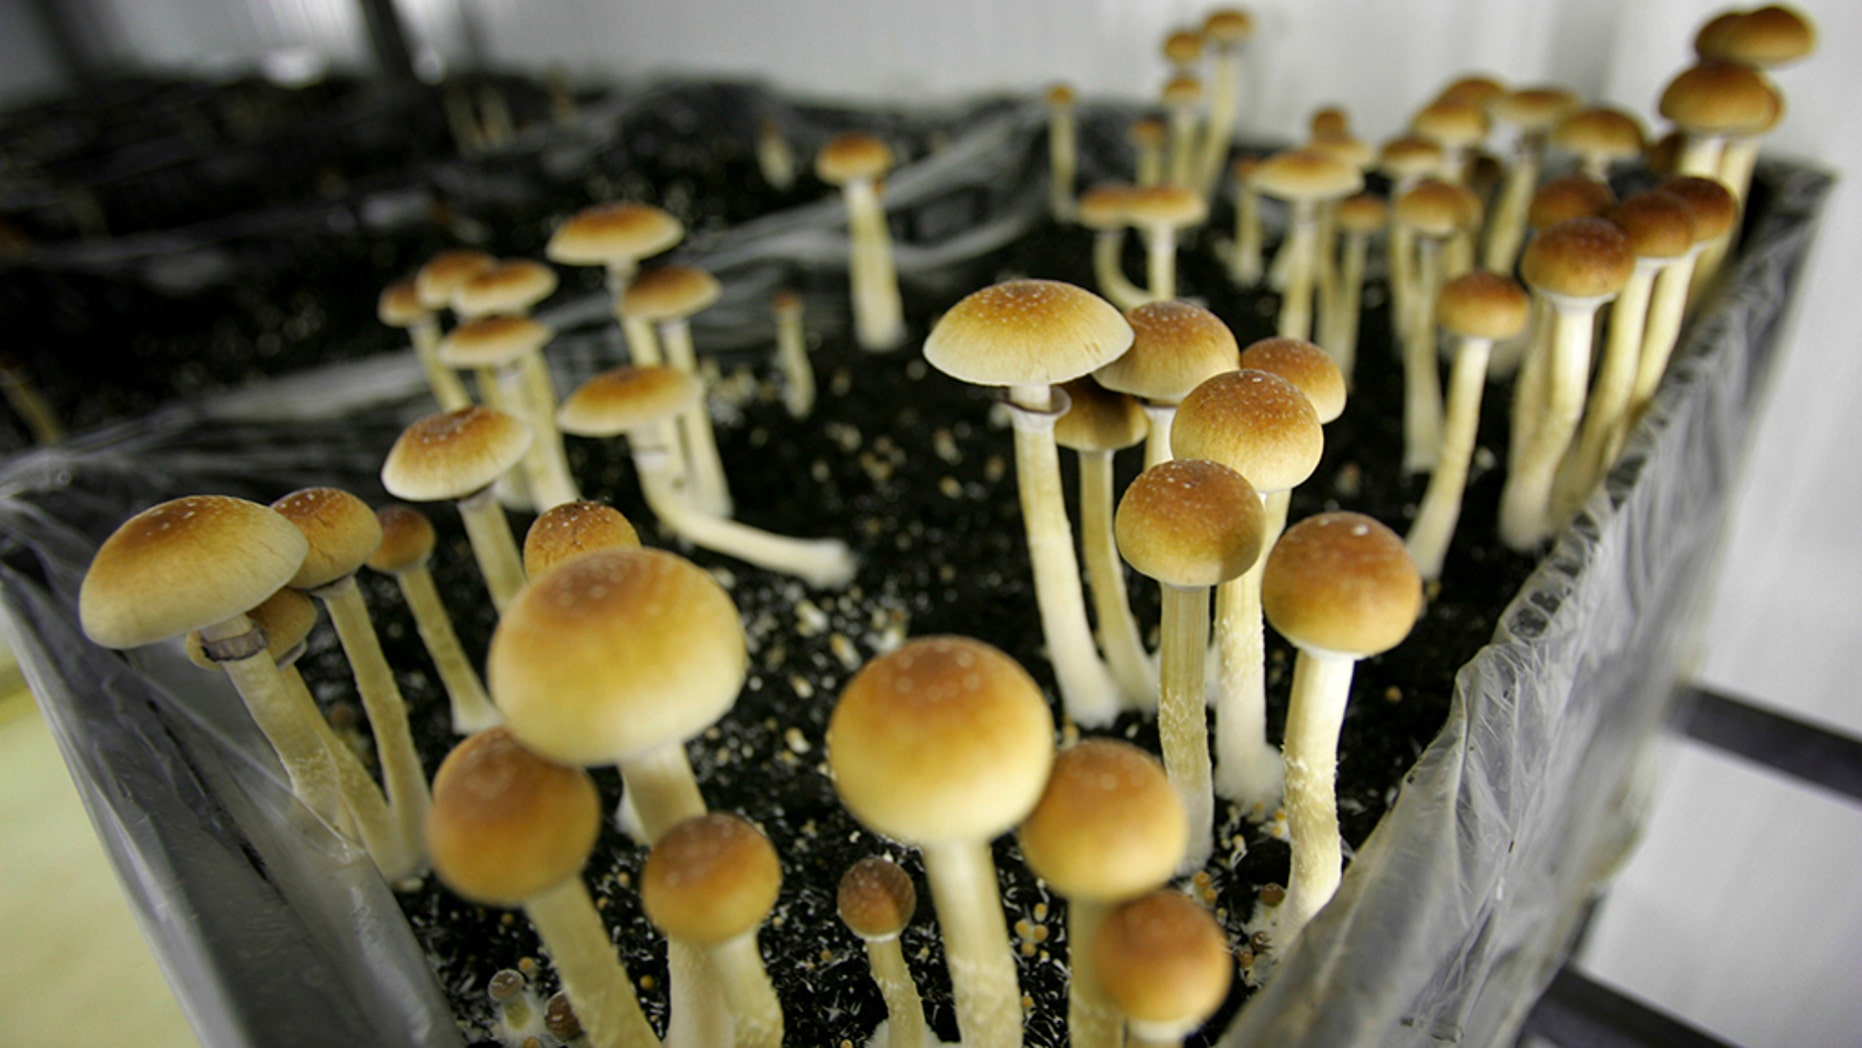 Denver may decriminalize magic mushrooms after thousands sign measure